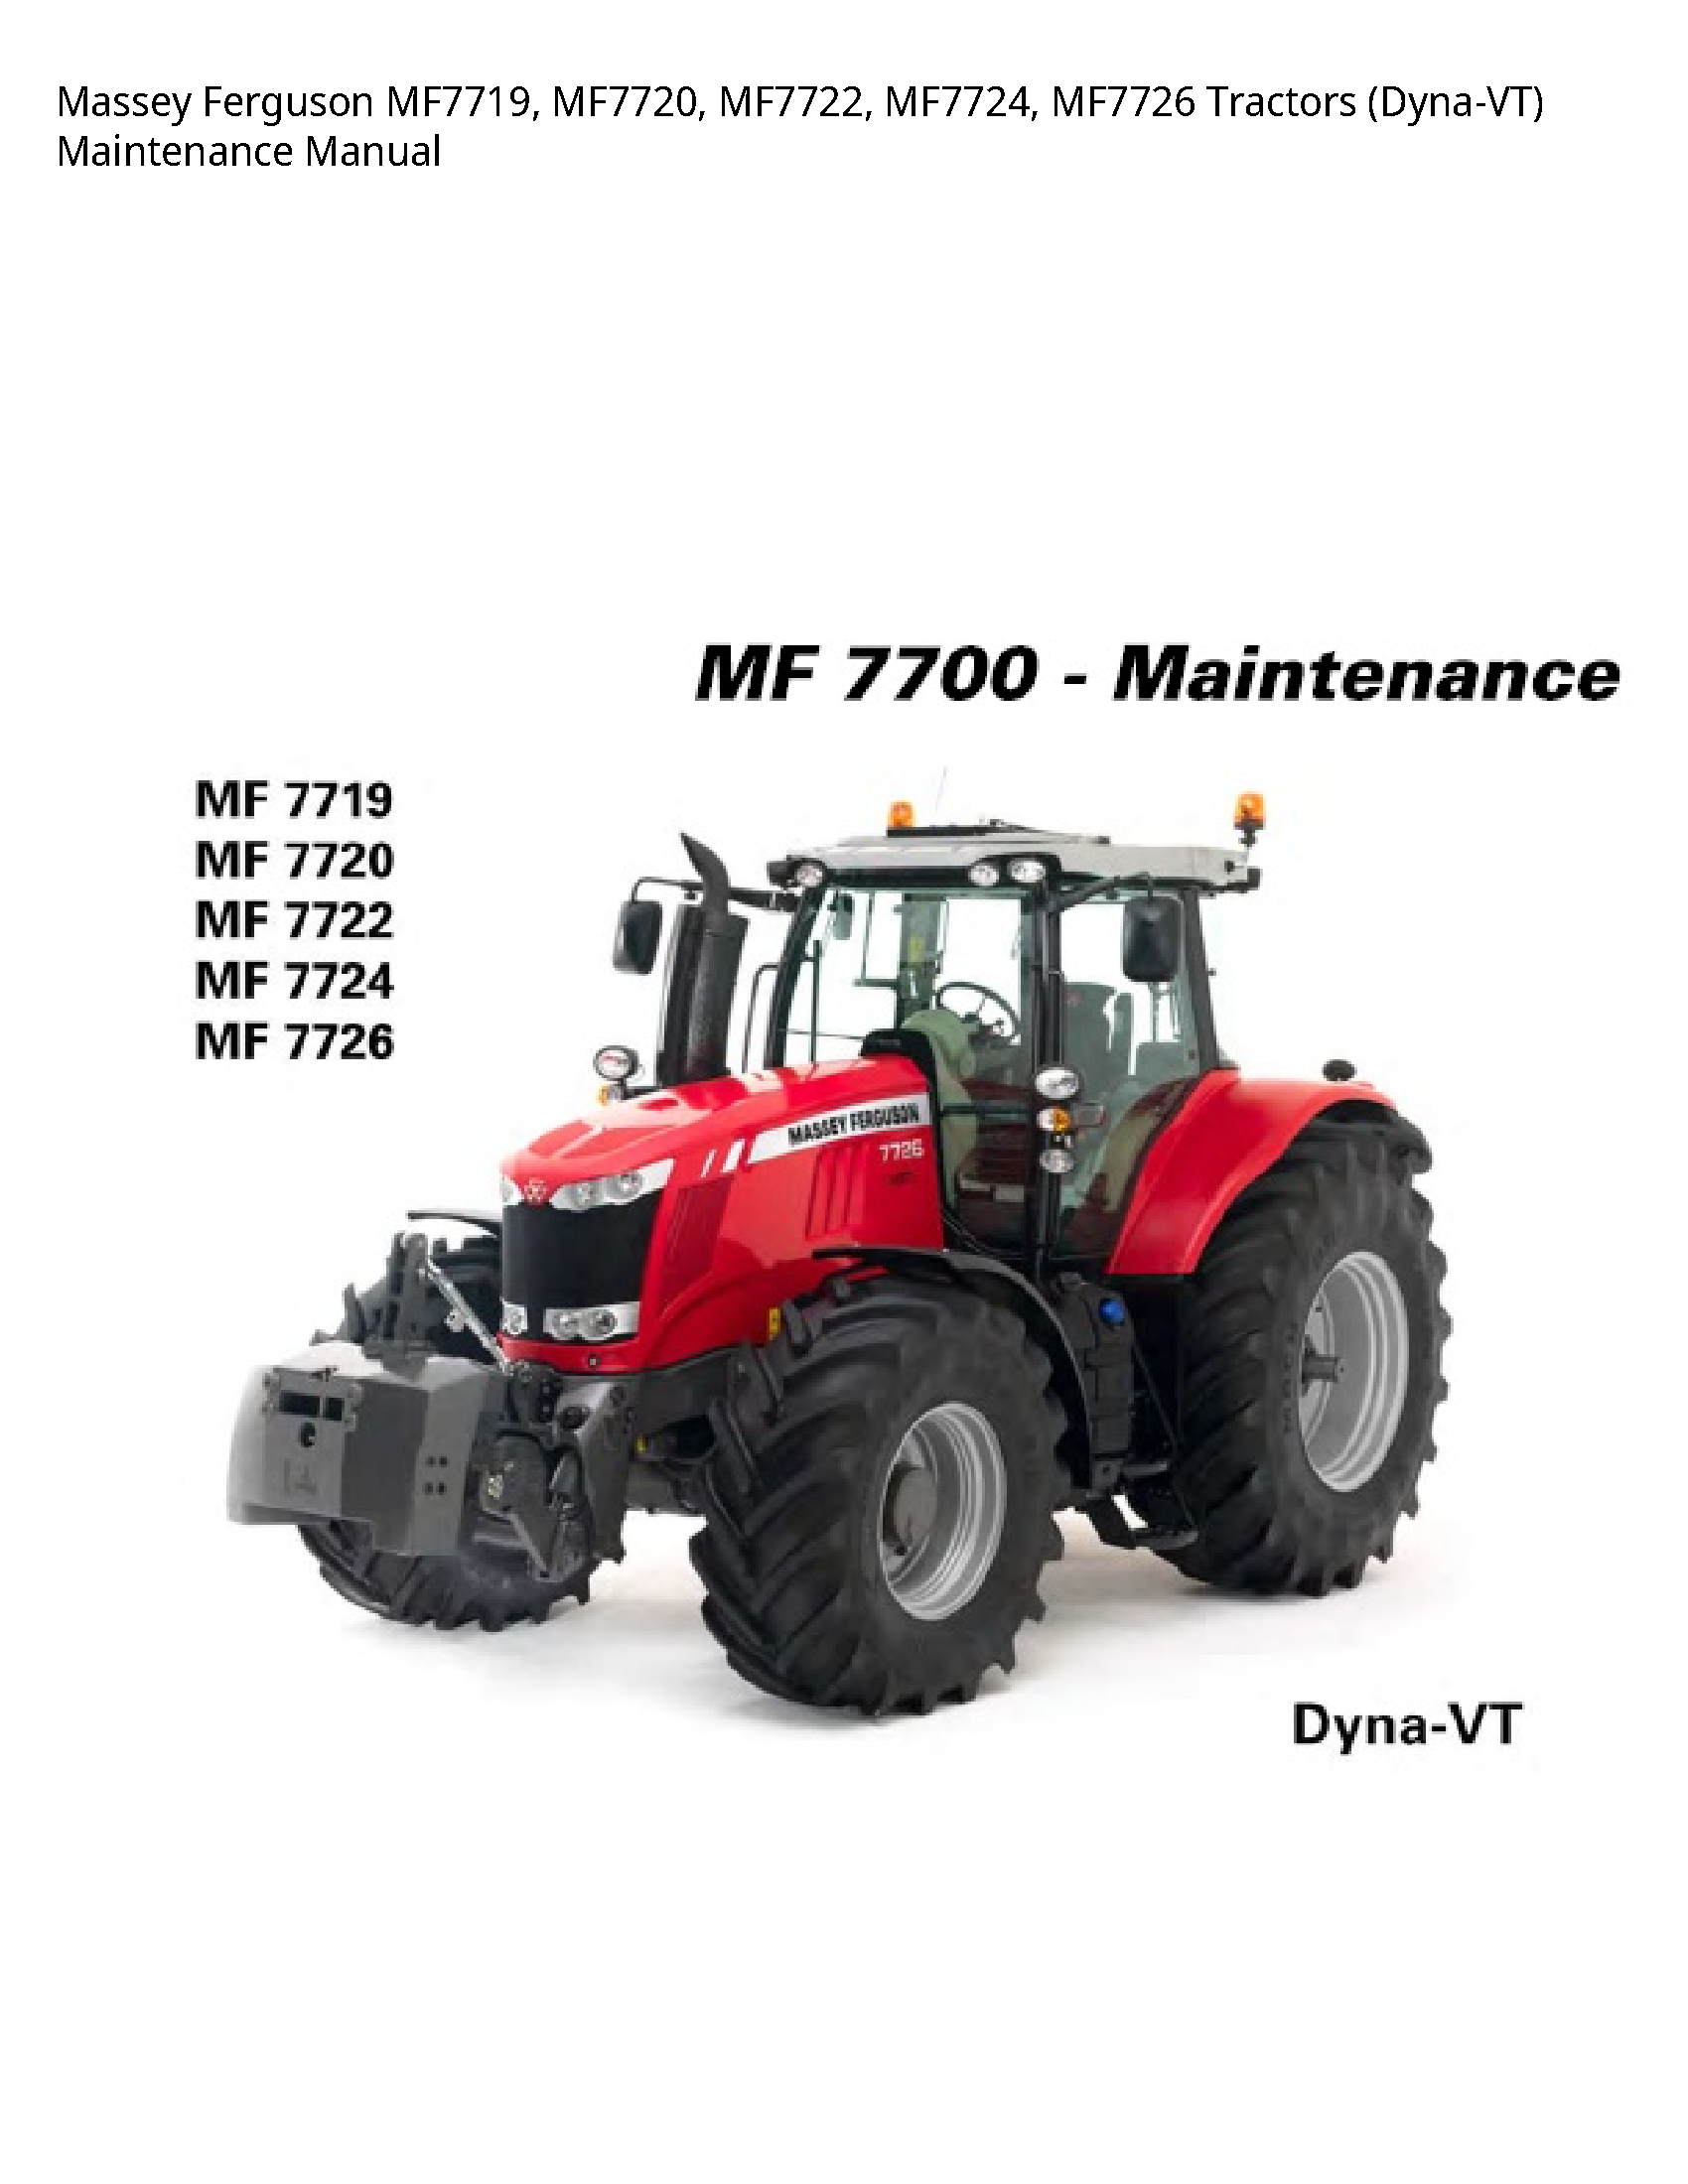 Massey Ferguson MF7719 Tractors (Dyna-VT) Maintenance manual